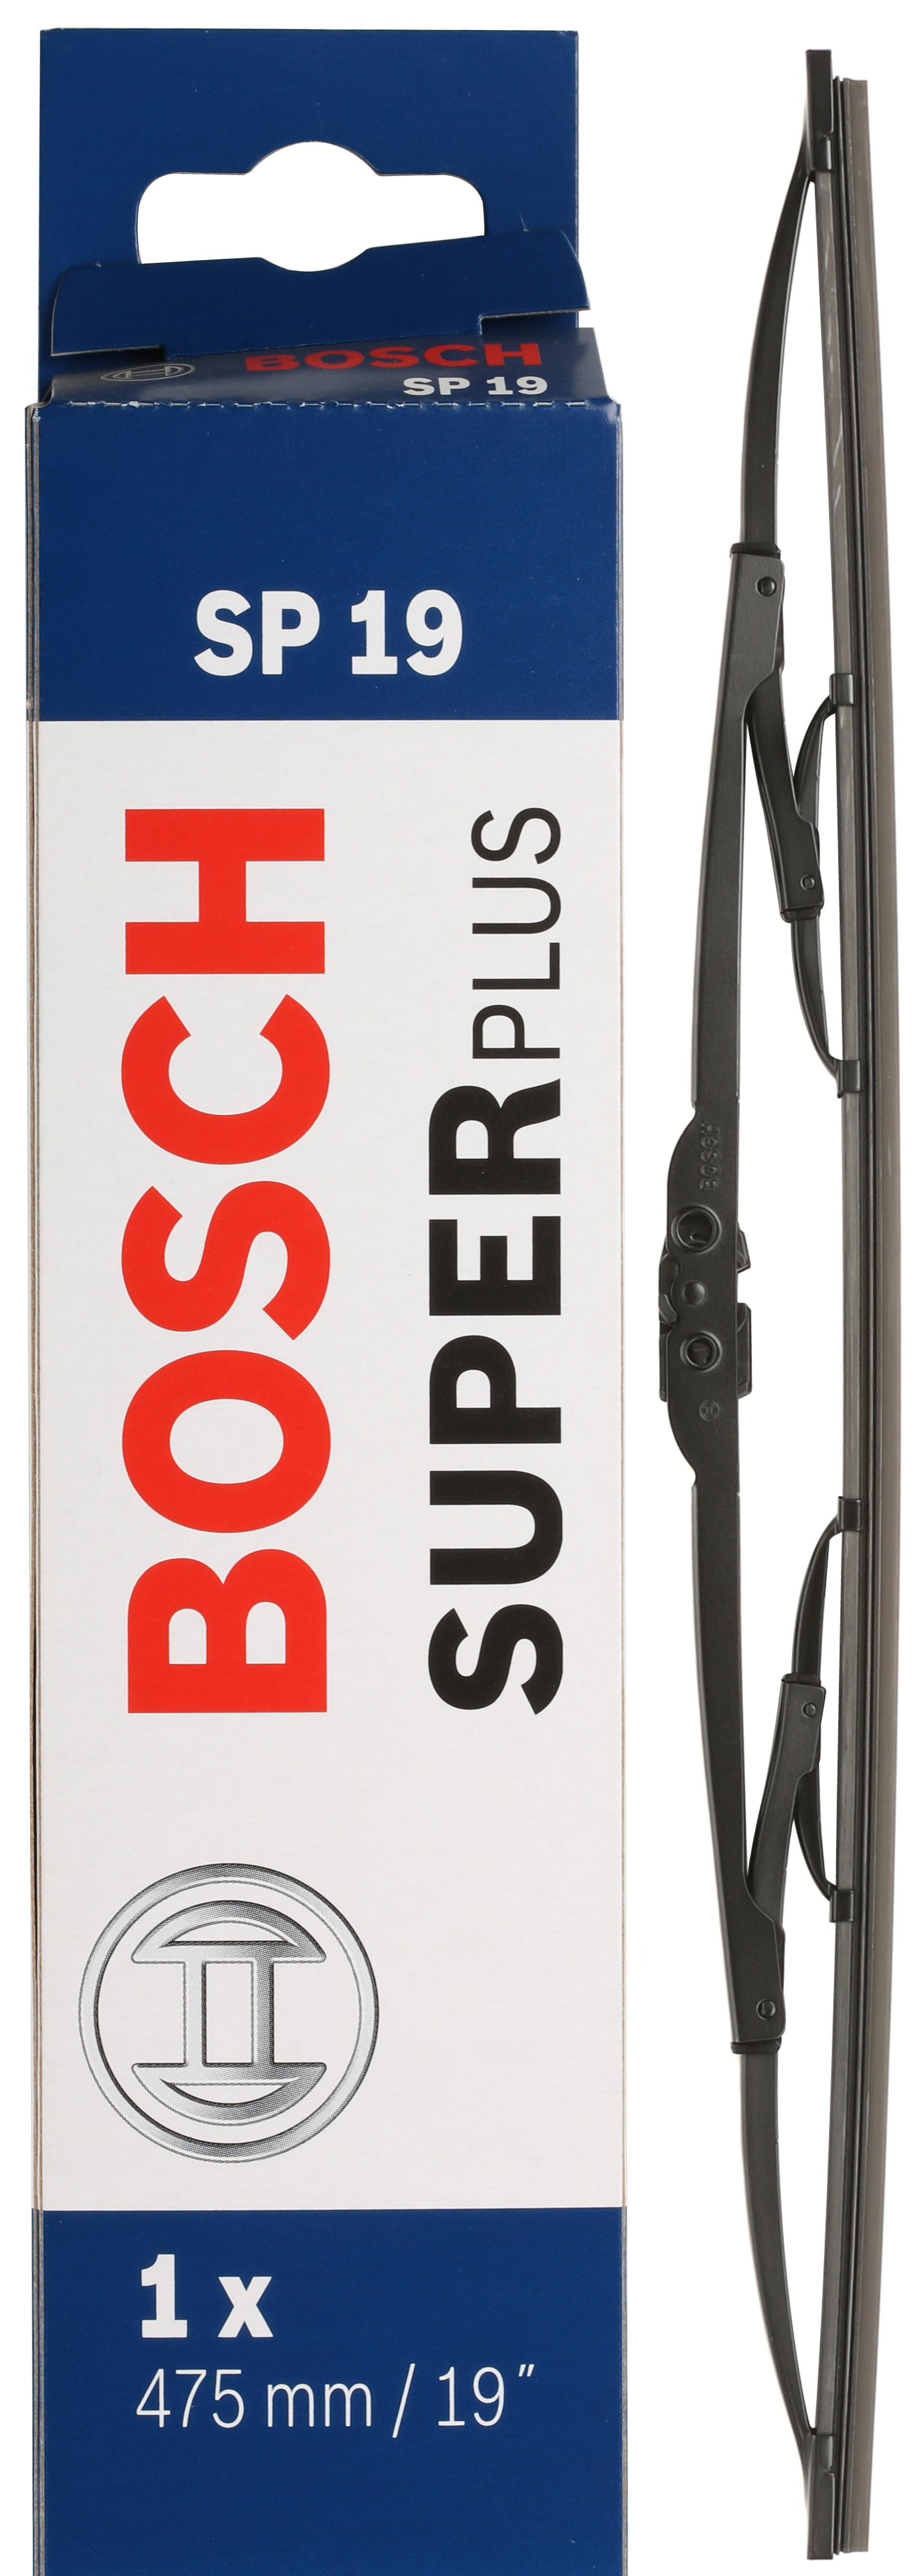 Bosch Sp19 Wiper Blade - Single